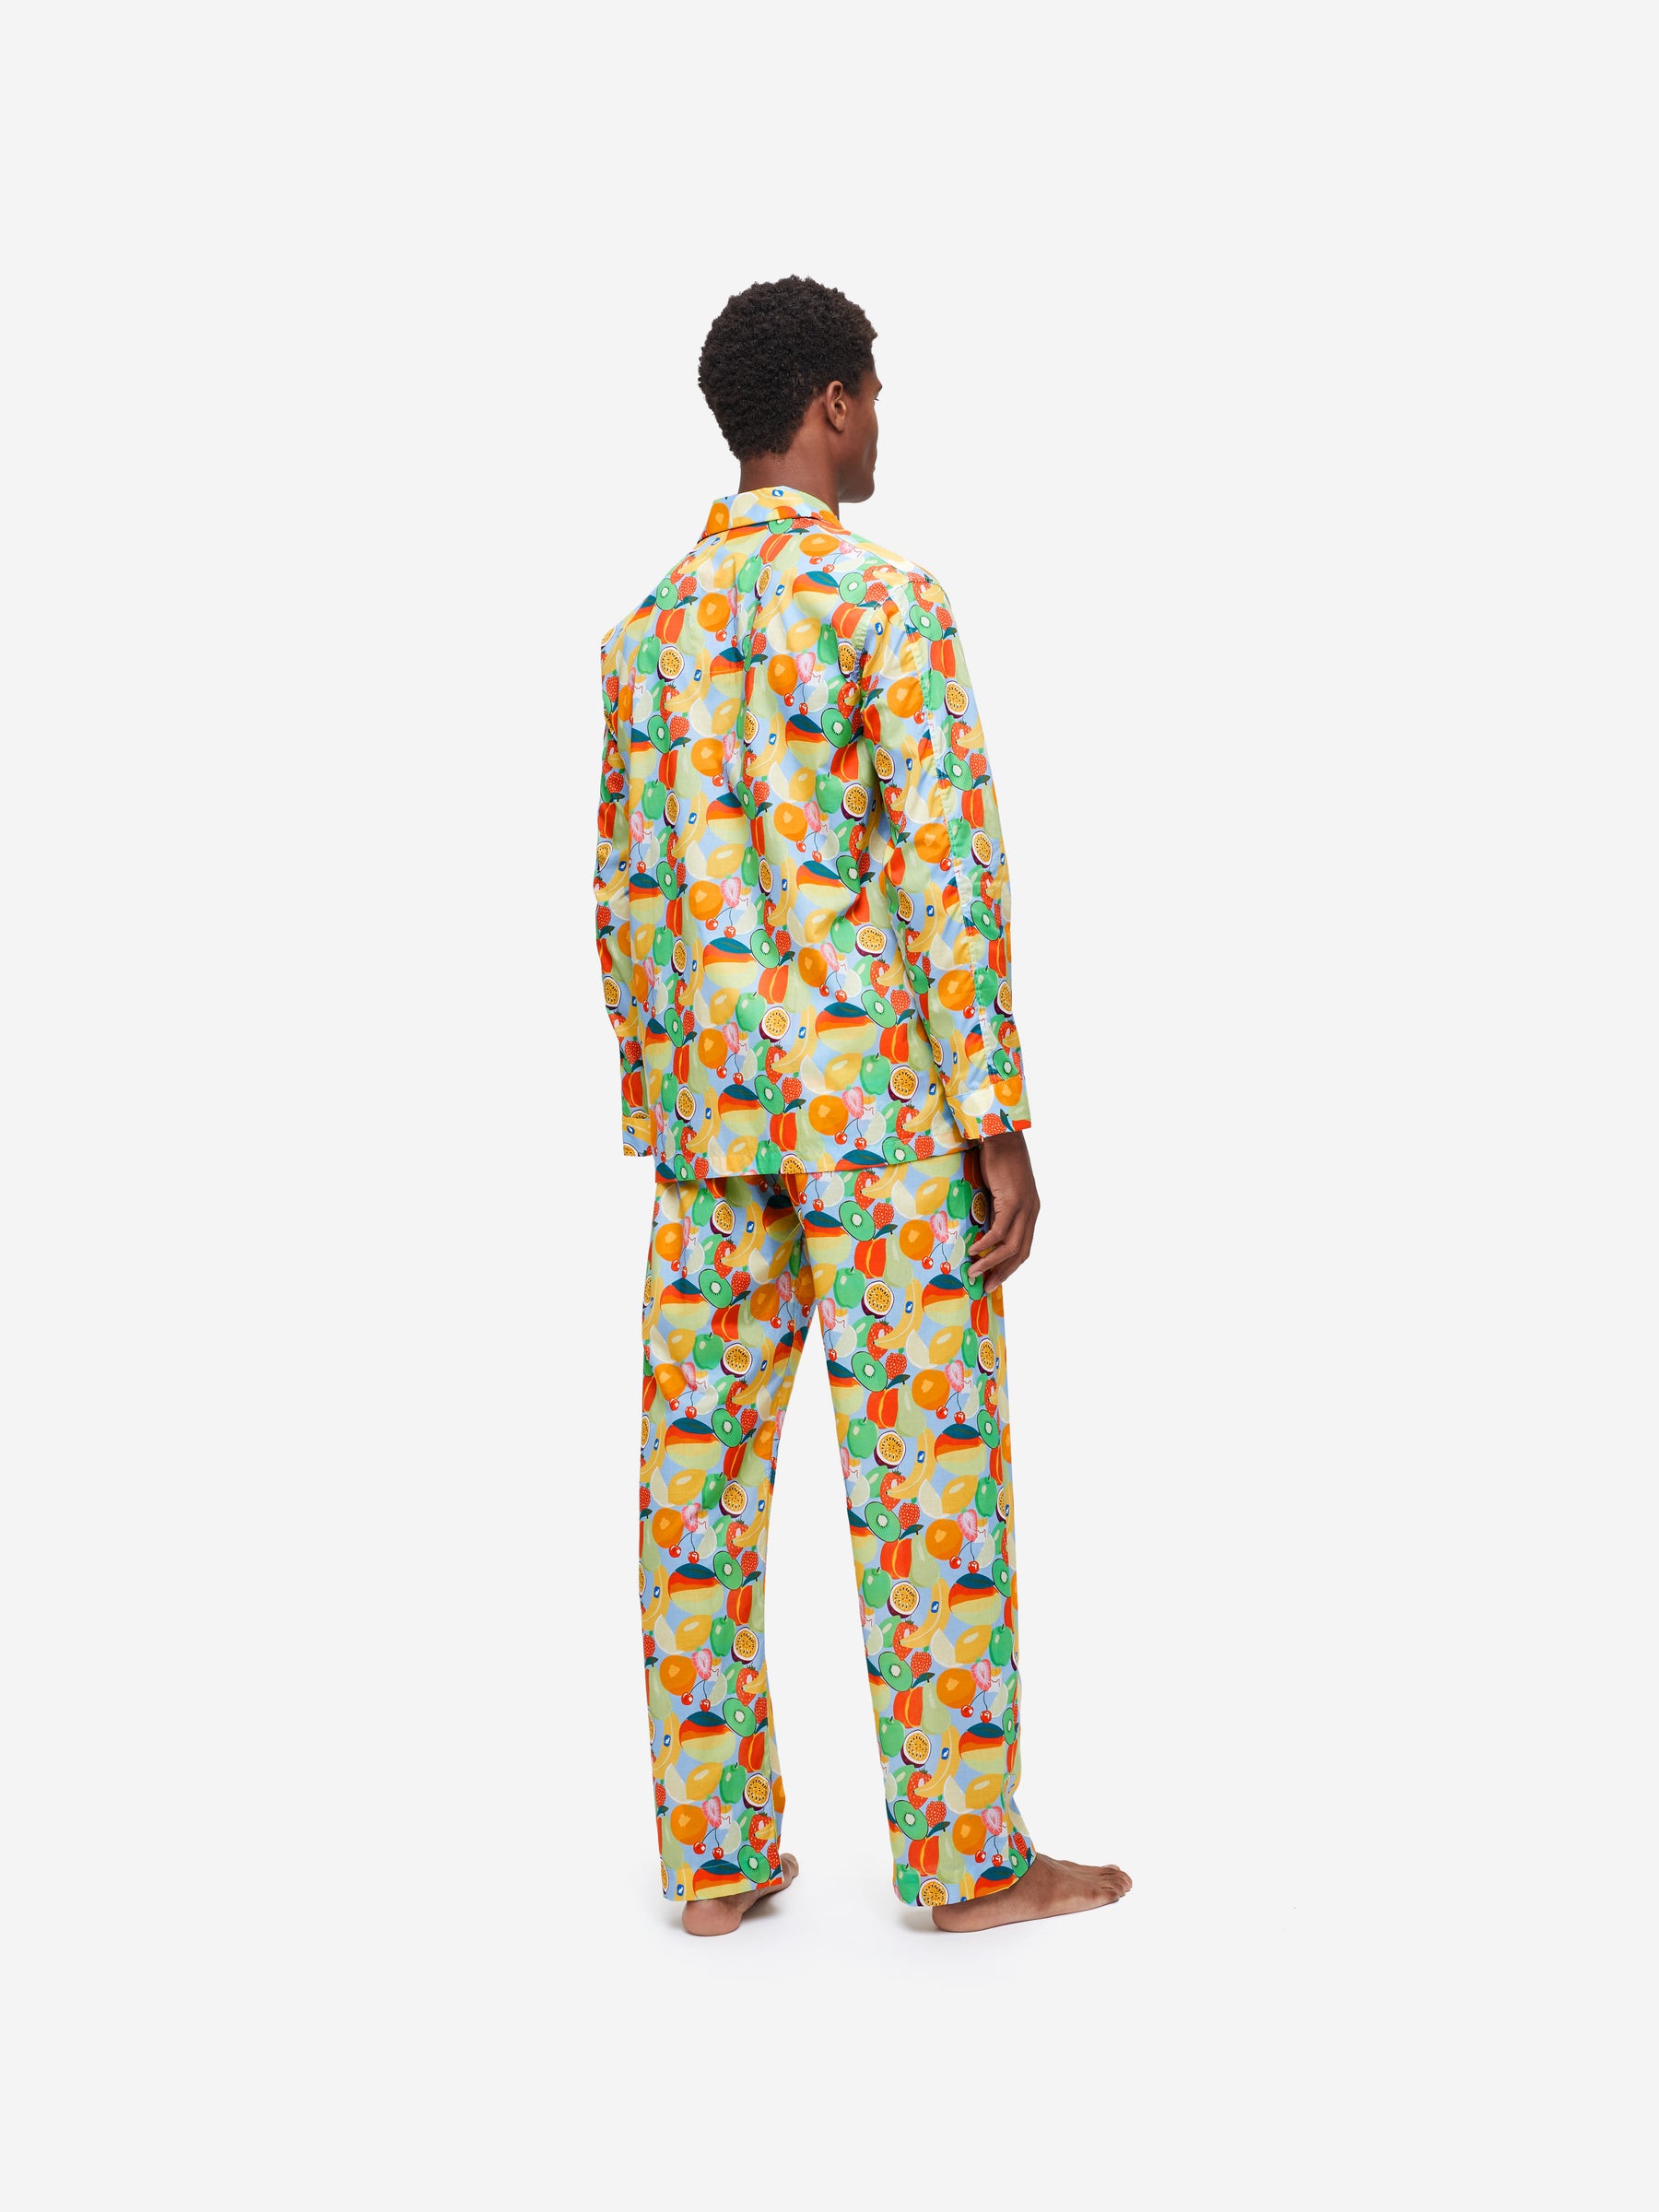 Men's Classic Fit Pyjamas Ledbury 49 Cotton Batiste Multi